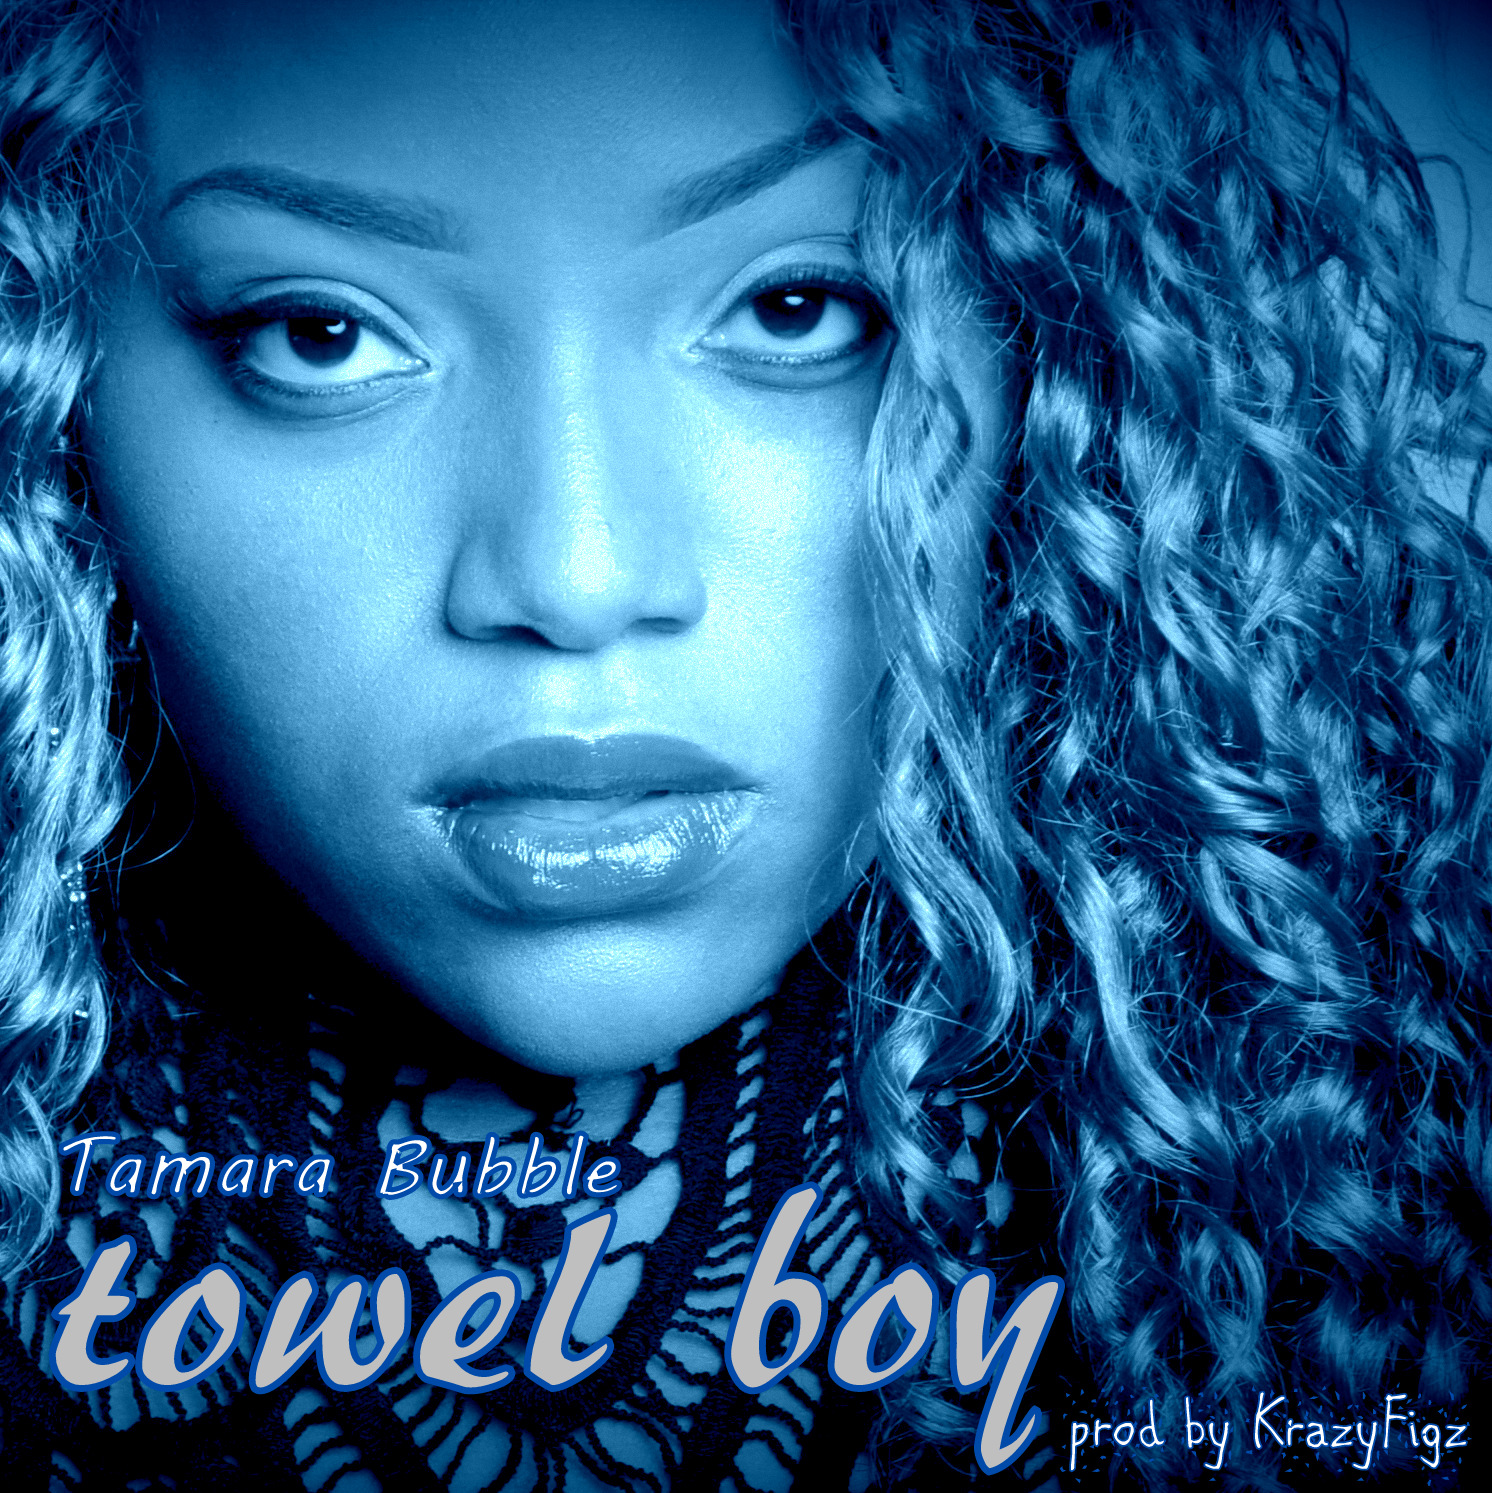  Tamara Bubble – “Towel Boy”